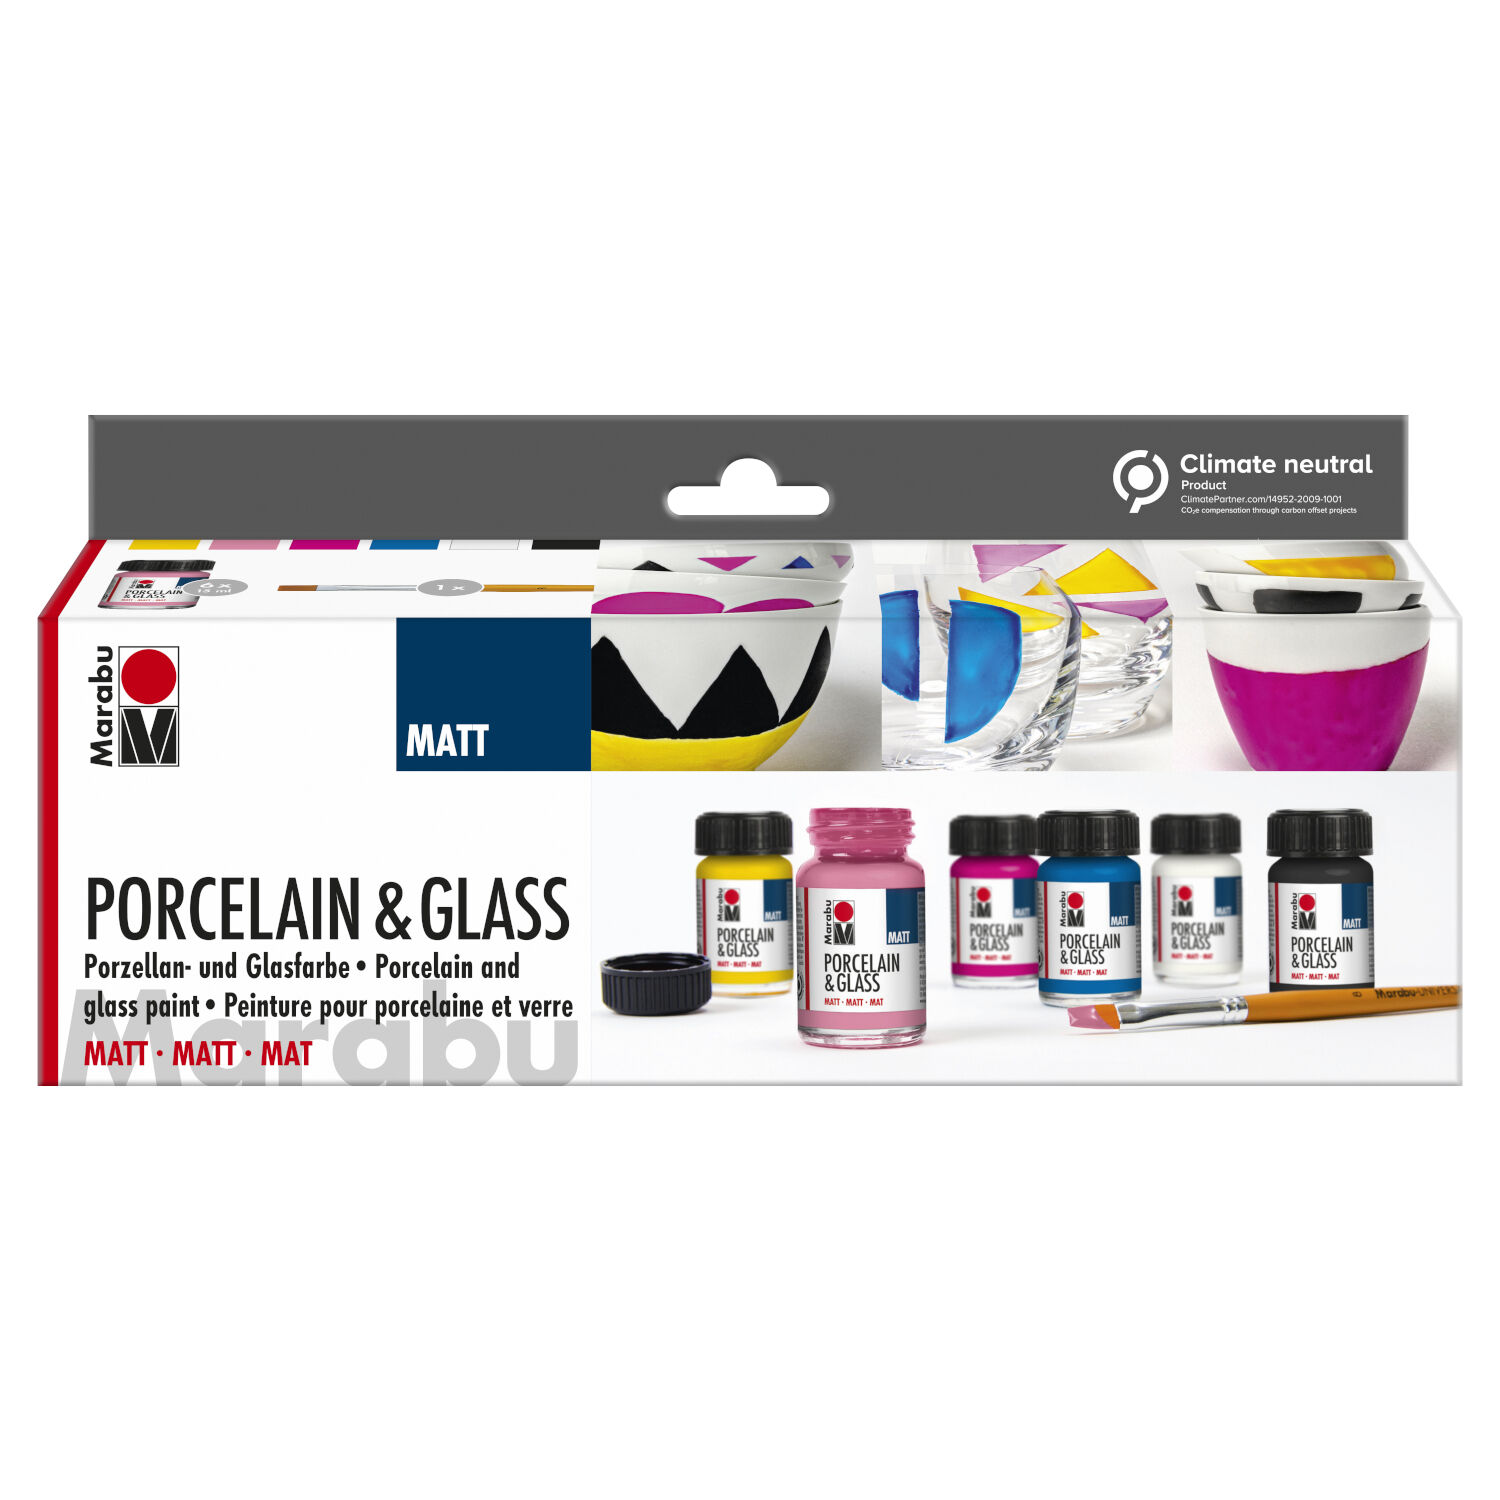 NEU Porcelain & Glass Matt, Glasmalfarbe / Porzellanfarbe Starterset, 6 x 15 ml, inklusive Pinsel